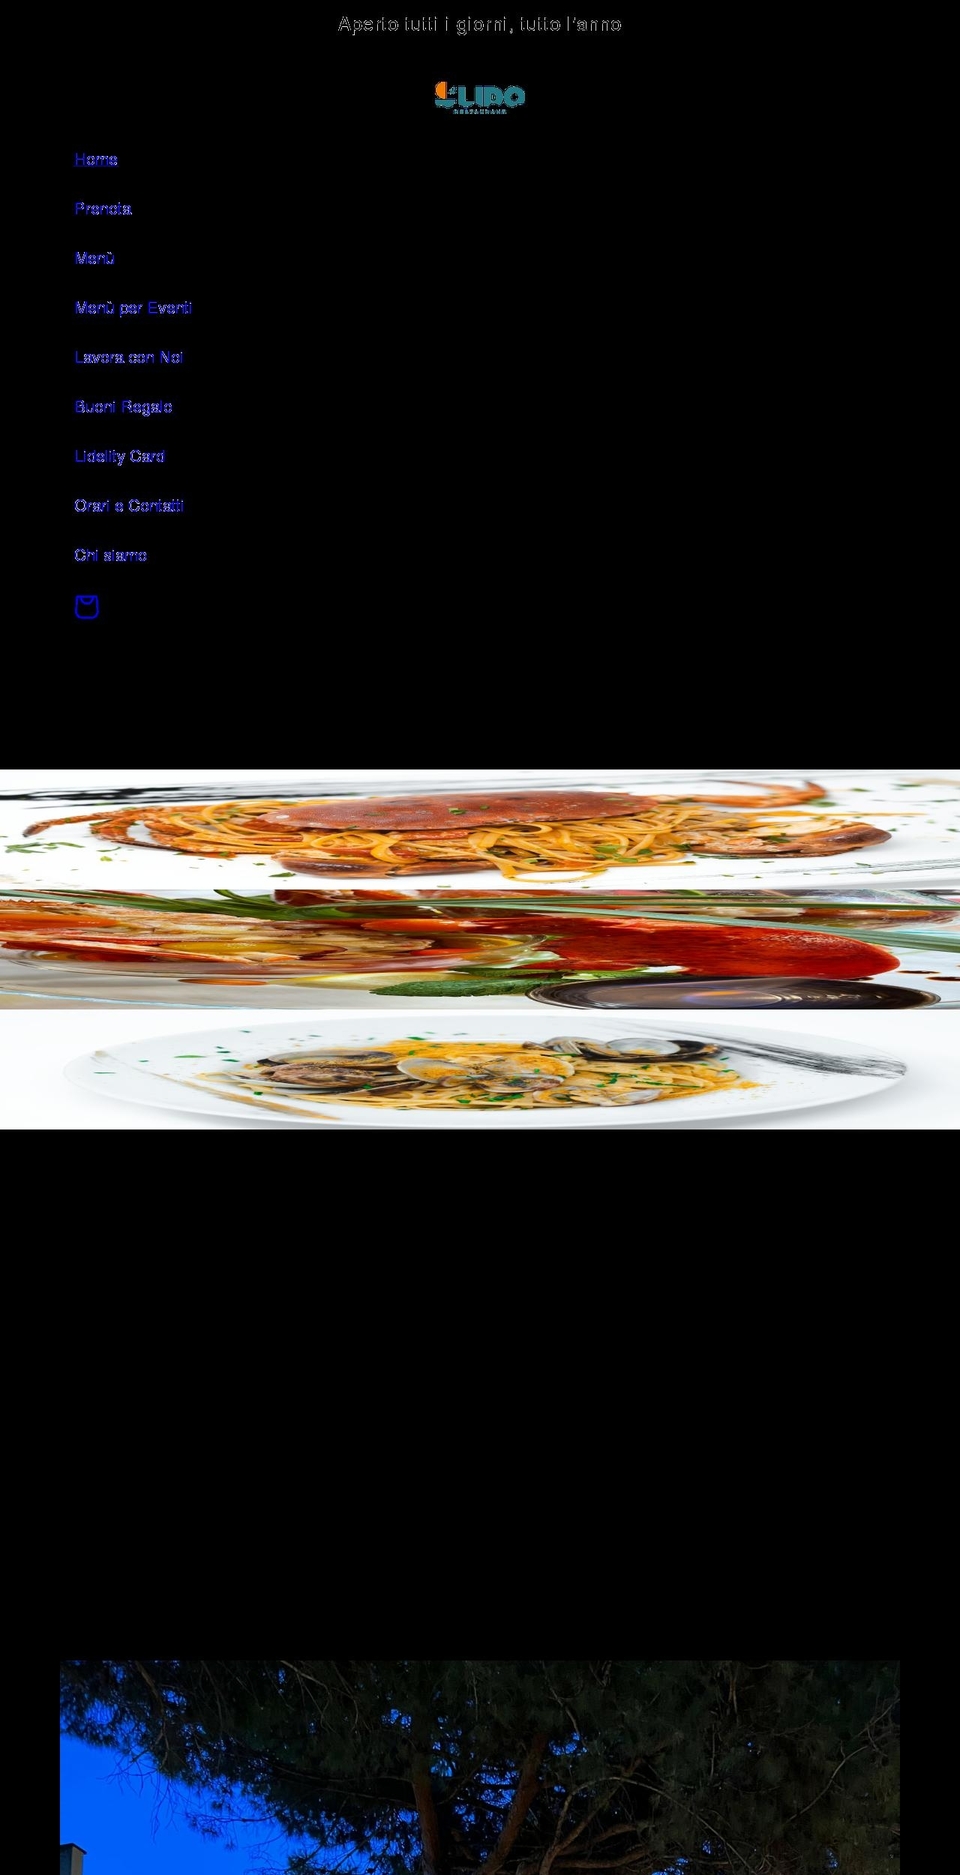 ristoranteillido.it shopify website screenshot